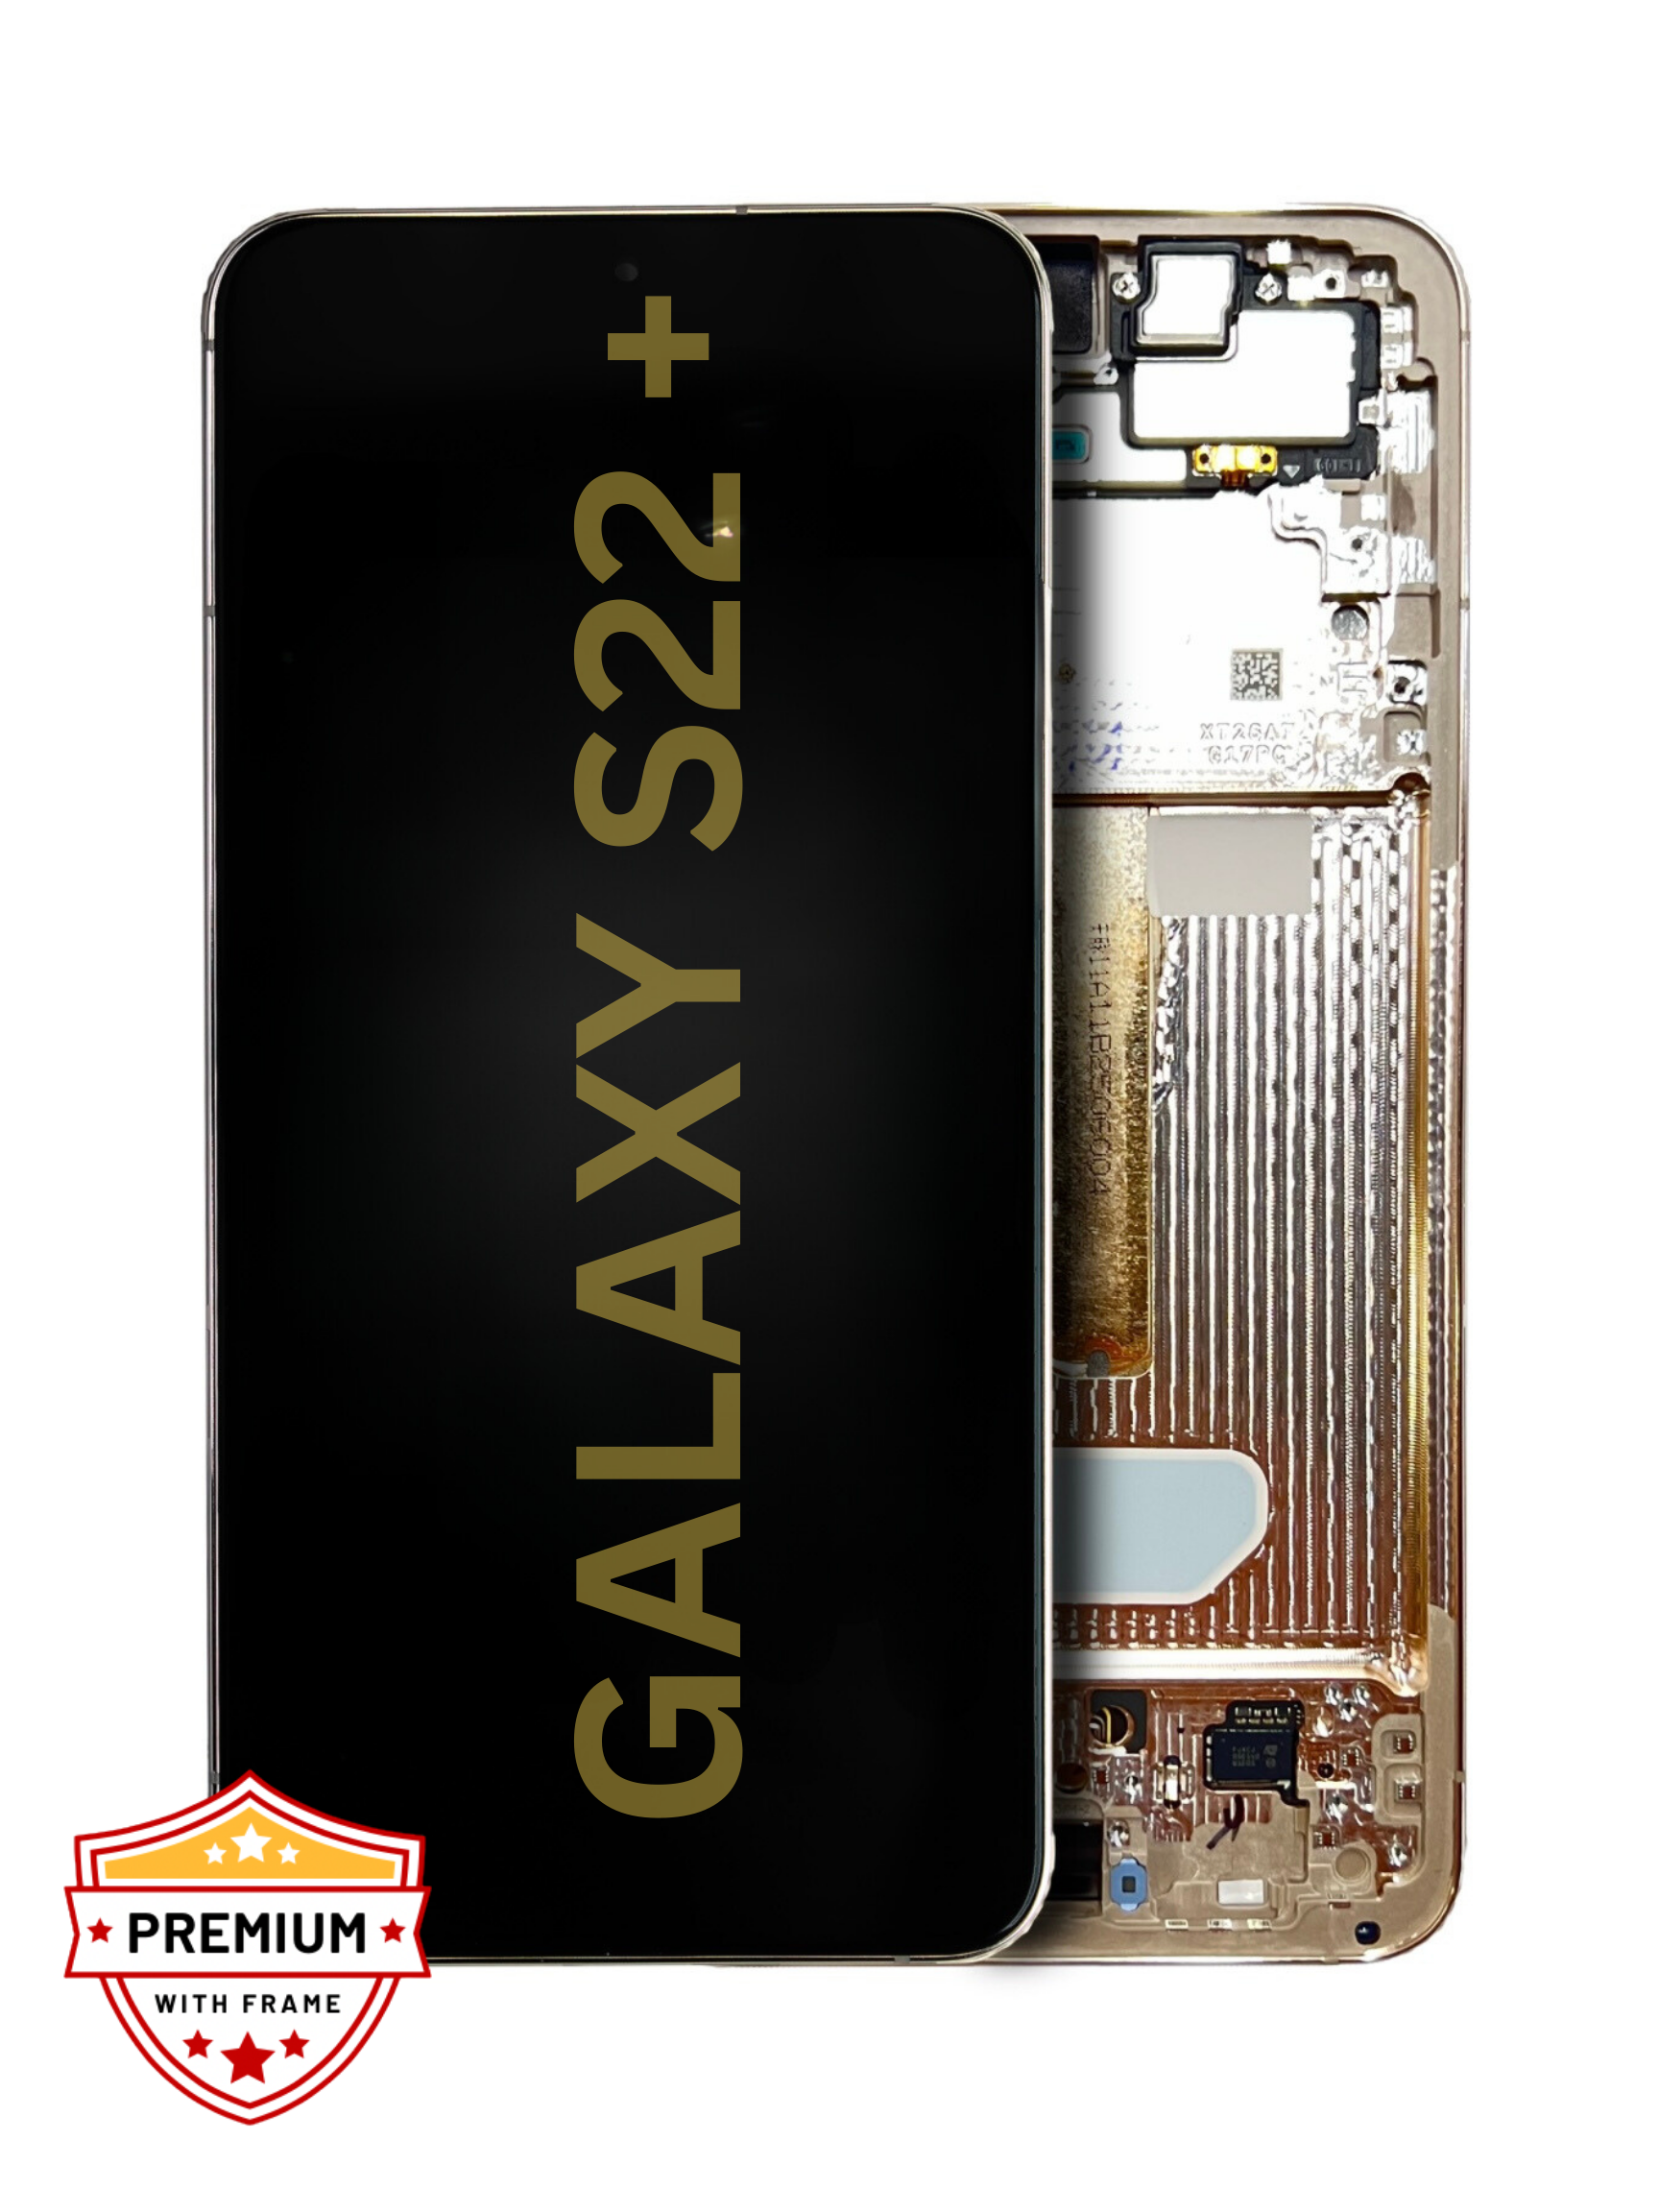 (Refurbished) Samsung Galaxy S22 Plus OLED Display with Frame (Violet)